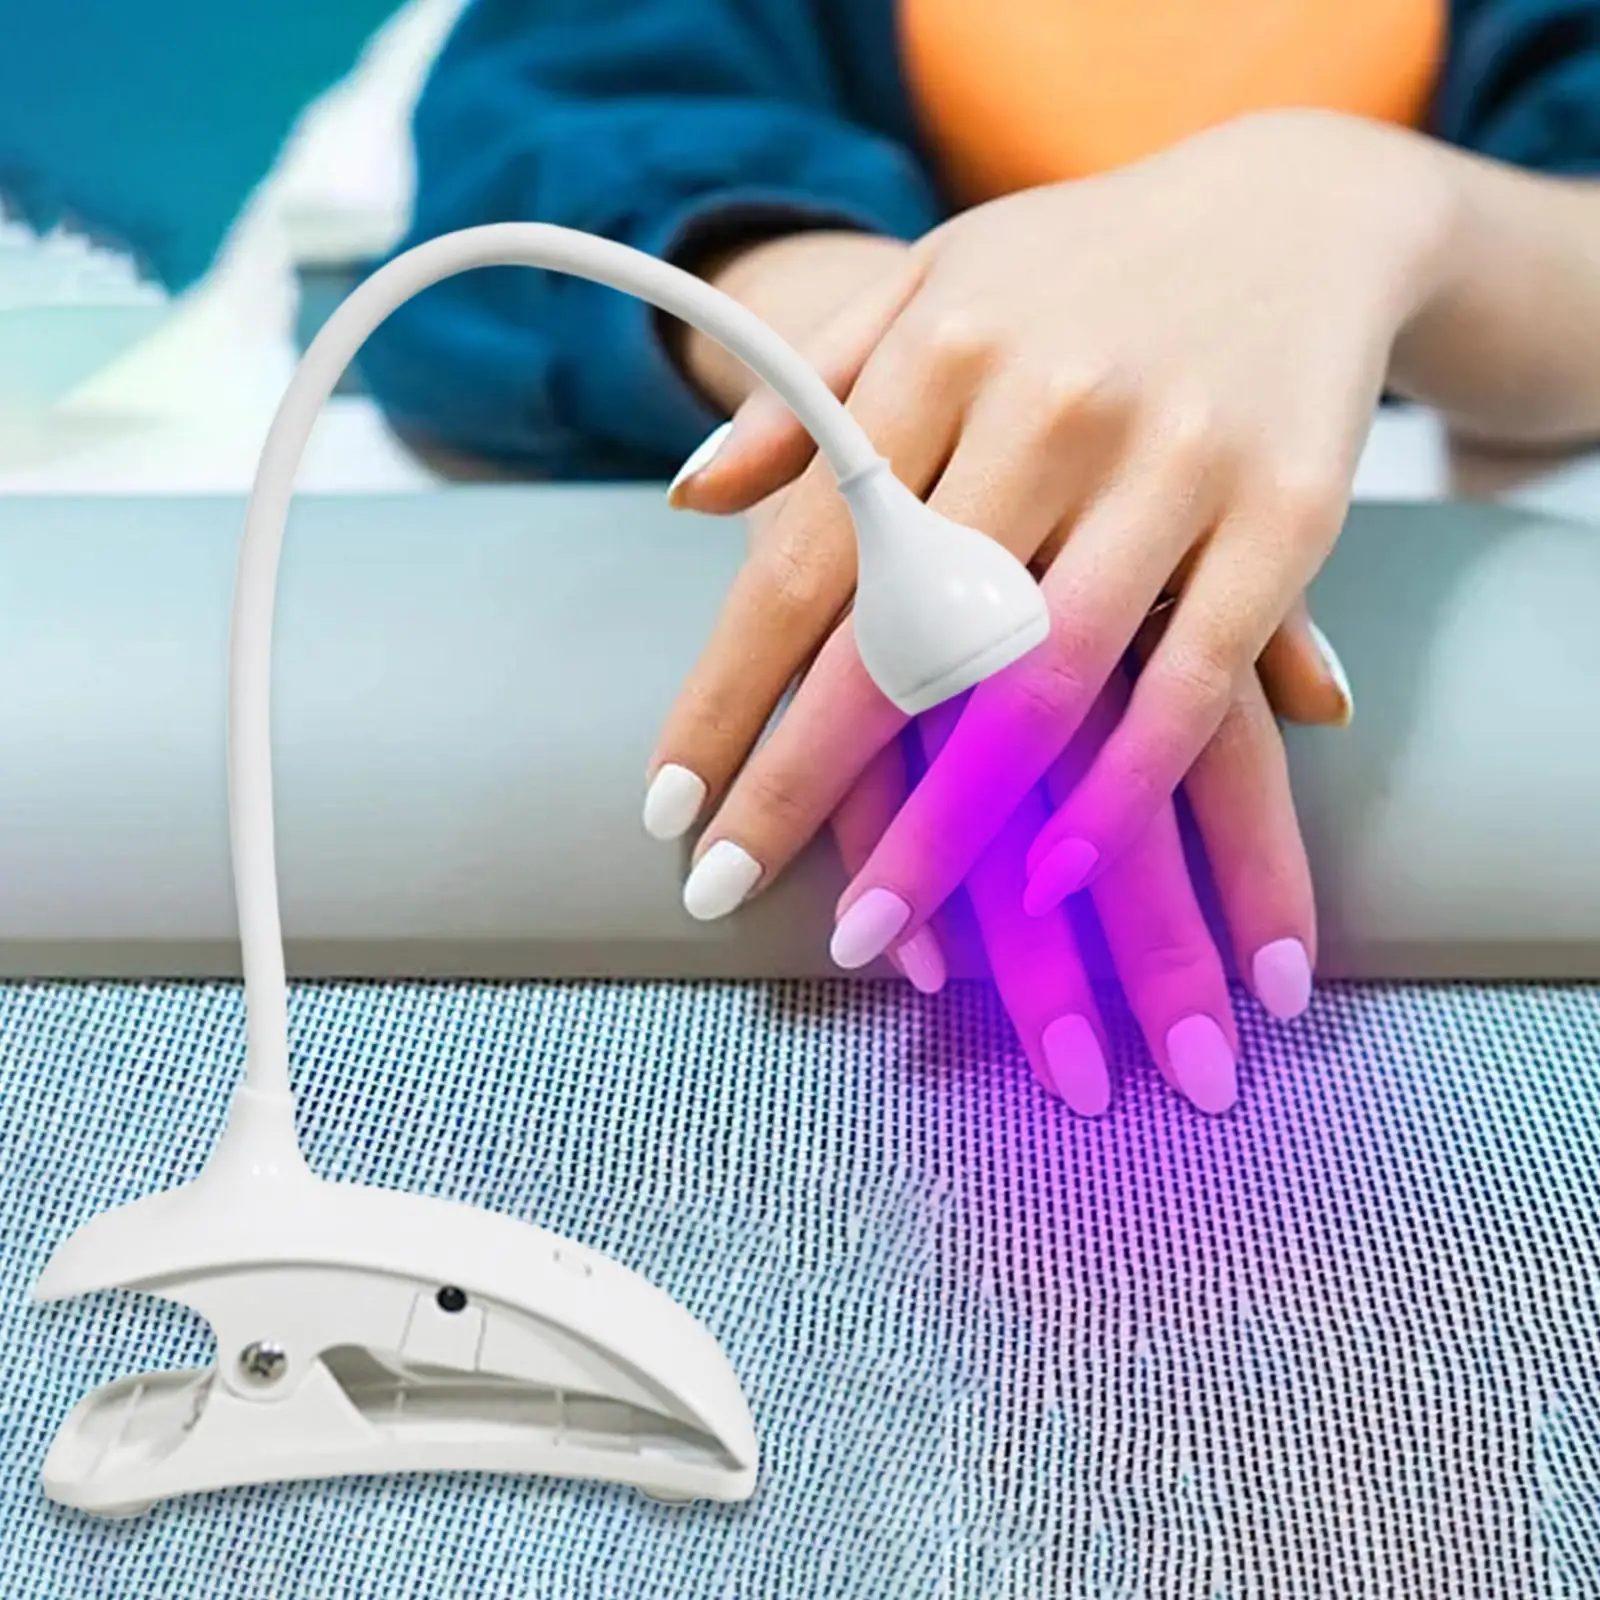 Nail Dryer Lamp Nail Art Tool 5W Nail Polish Curing Light for Salon Home DIY